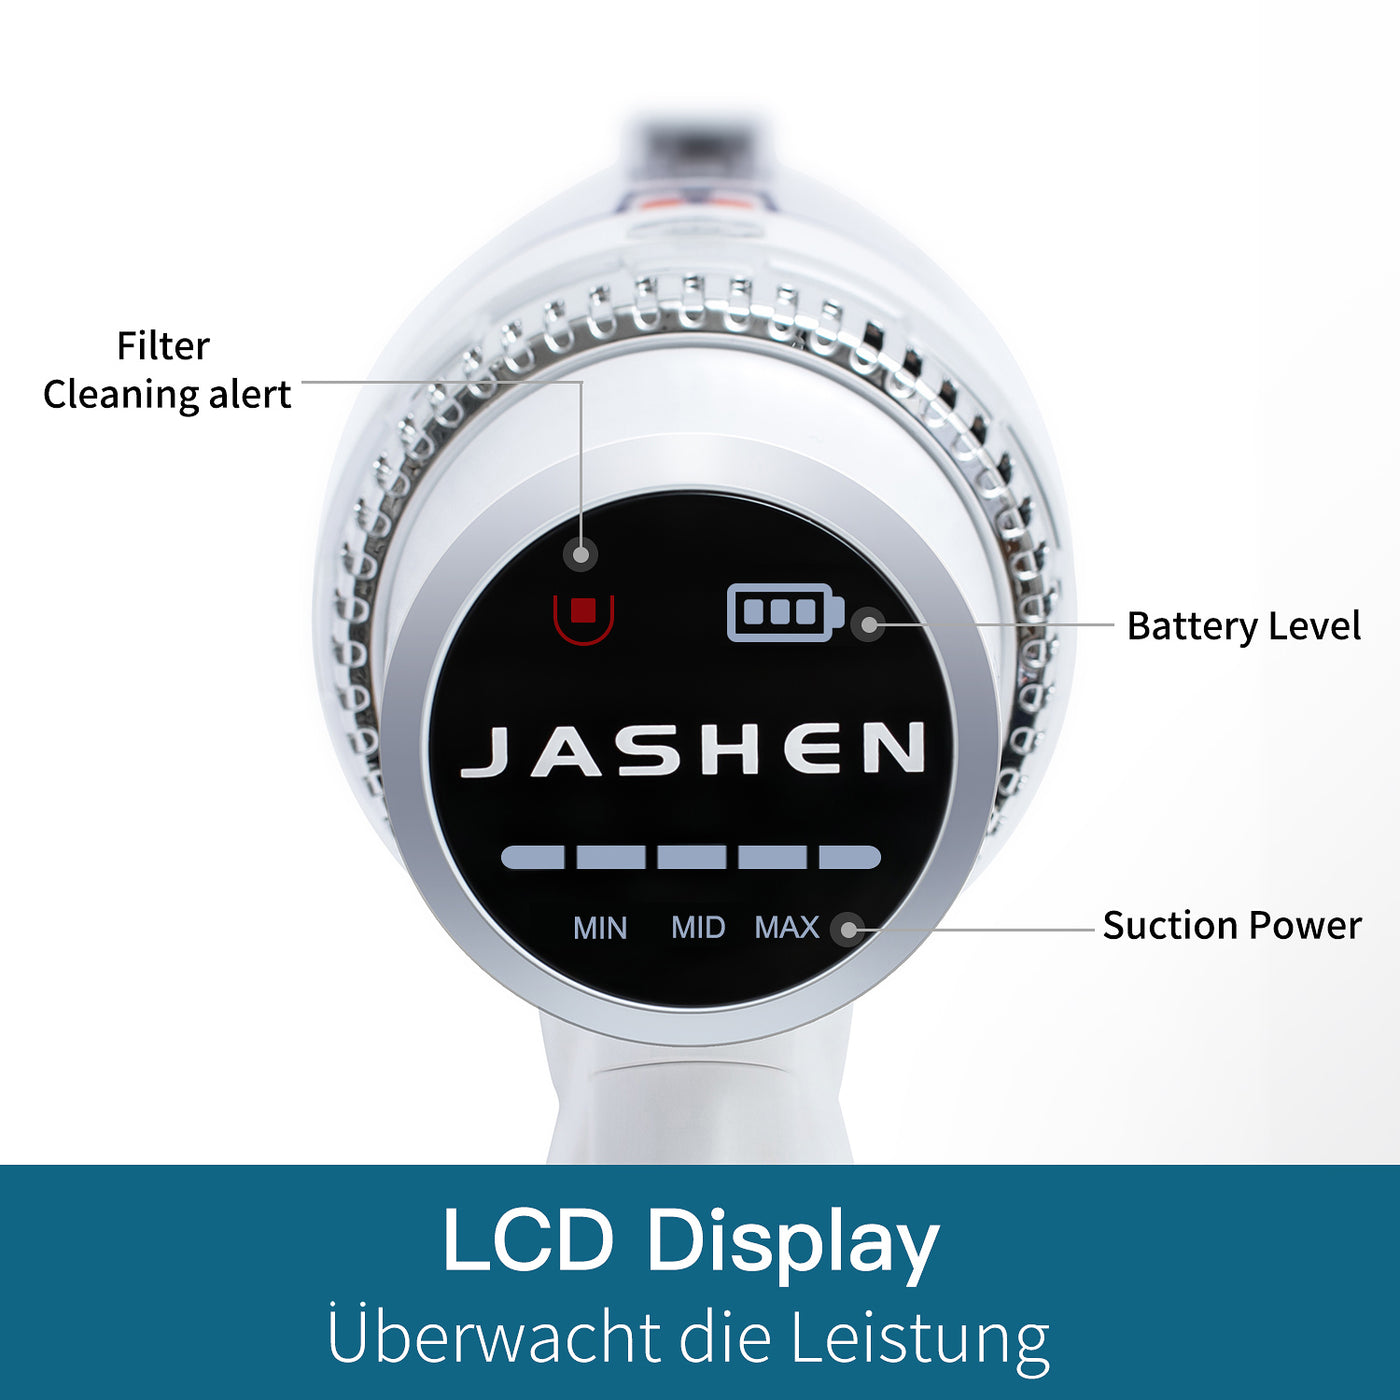 JASHEN S16X Kabelloser Staubsauger (80 Minuten Laufzeit, 350W, 2.500 mAh wechselbarer Lithium-Ionen-Akku, LED-Anzeige, 3-Gang-Modus)